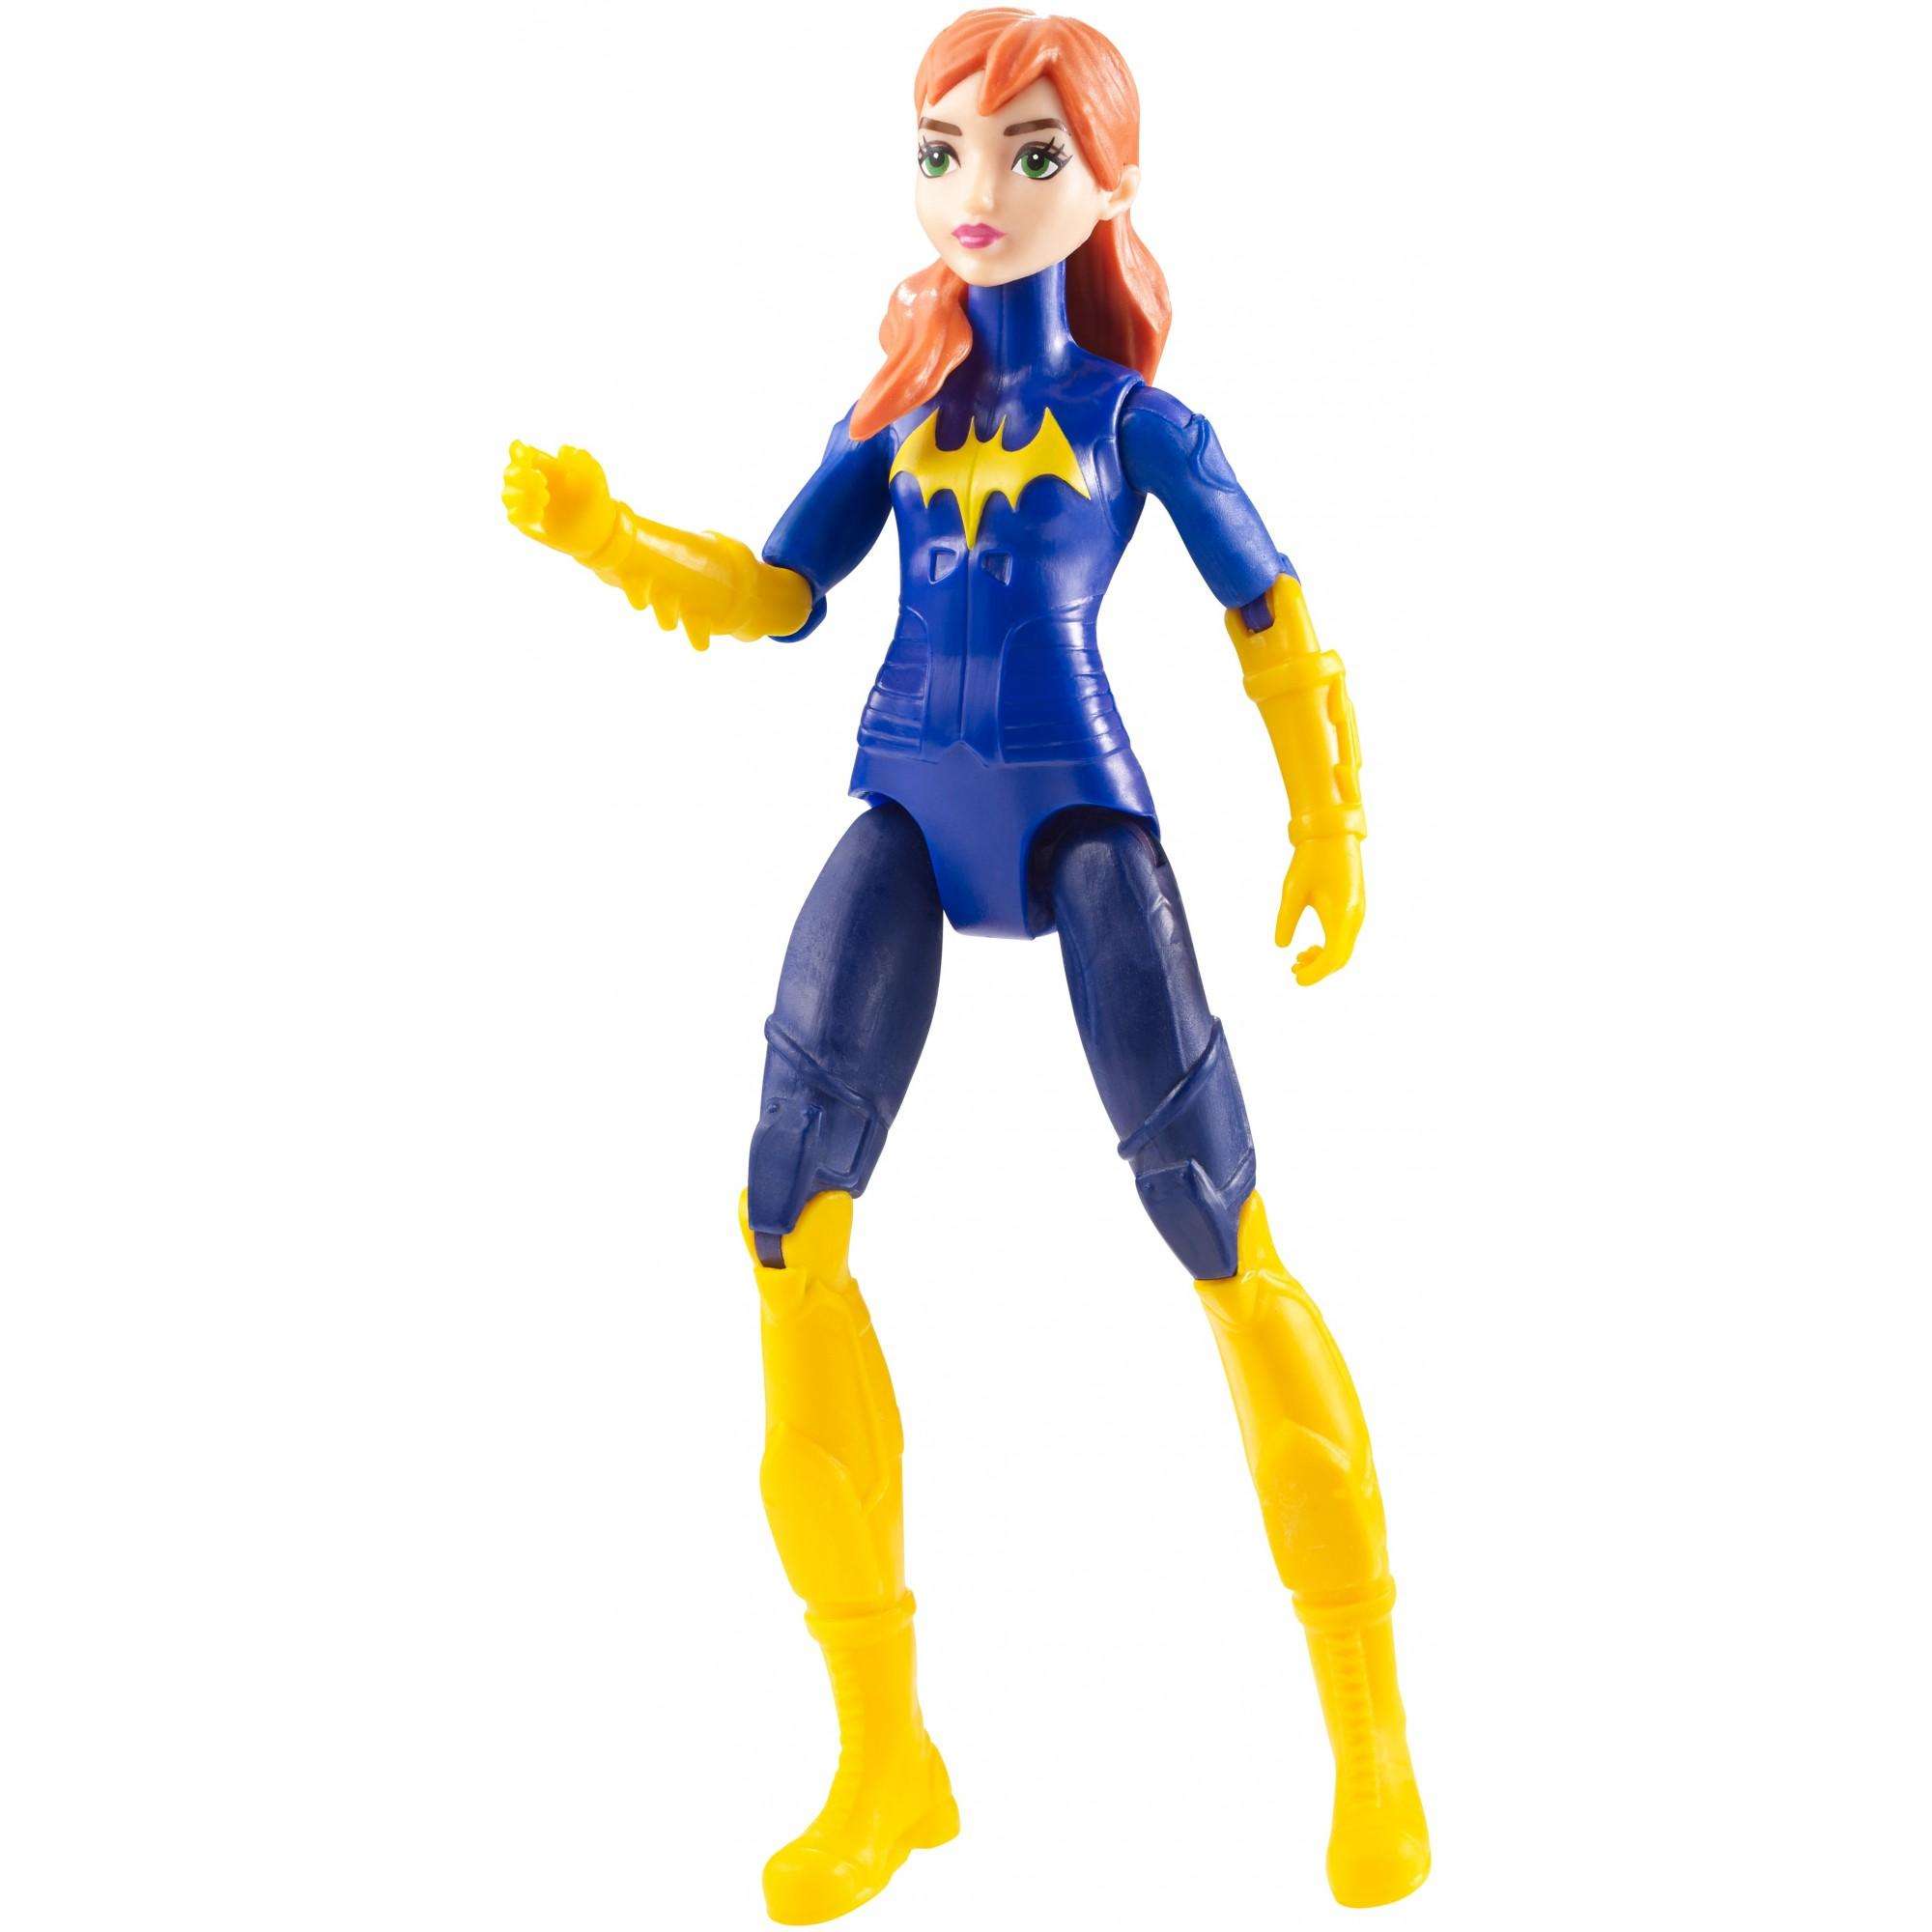 DC Super Hero Girls Batgirl 6-Inch Action Figure with Batjet - image 4 of 8